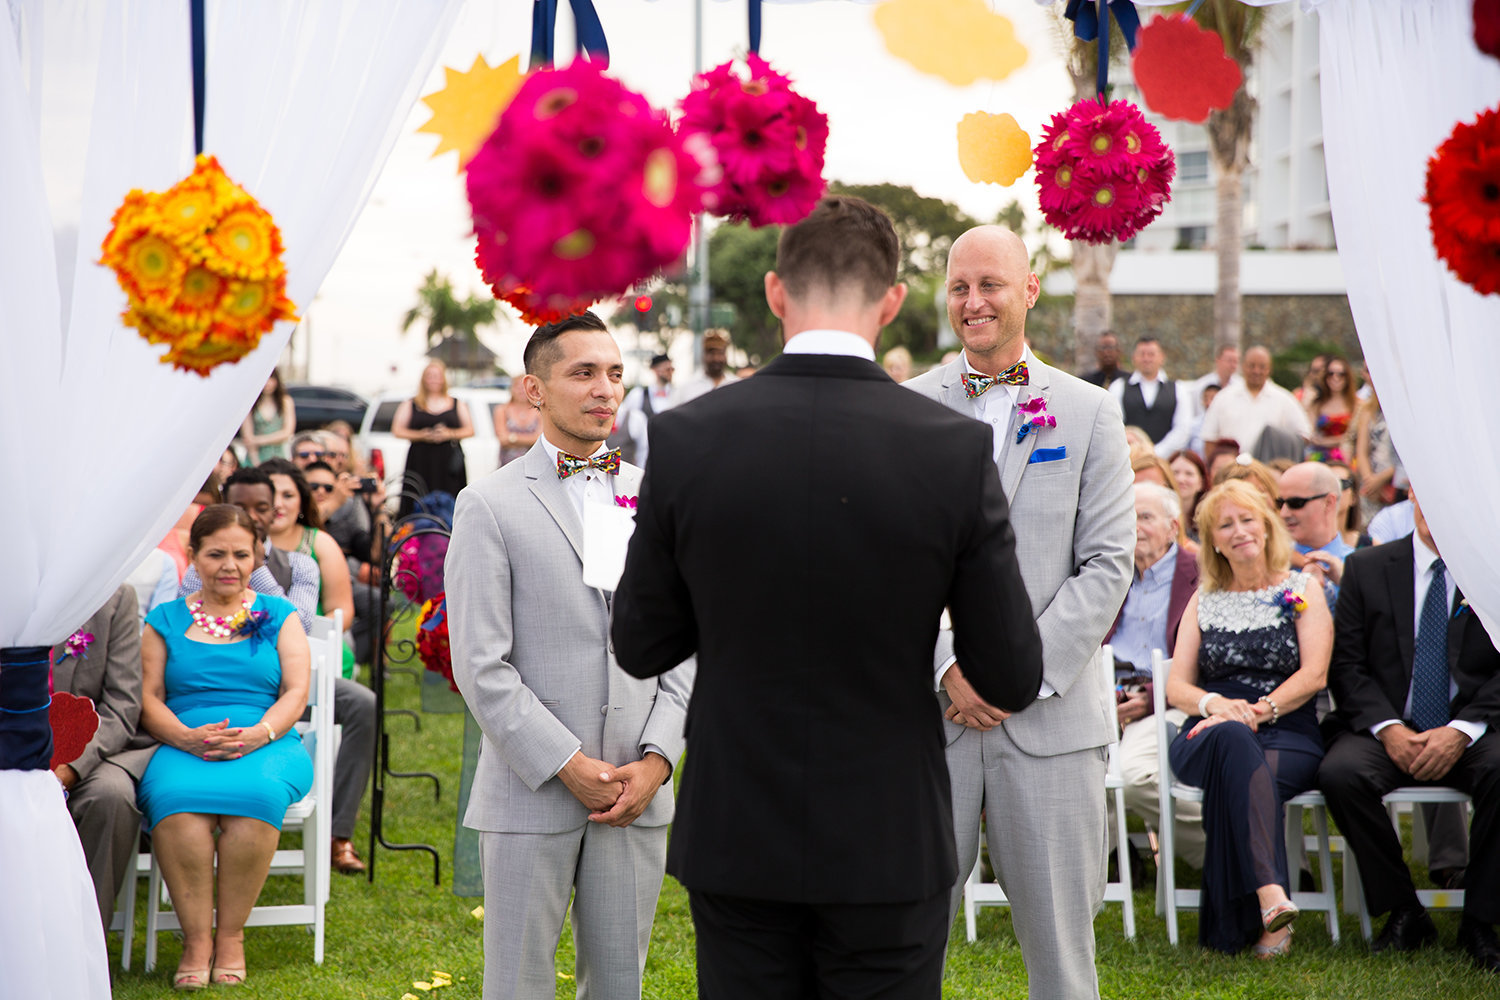 Emotional Moment During a Gay Wedding Ceremony in Coronado California